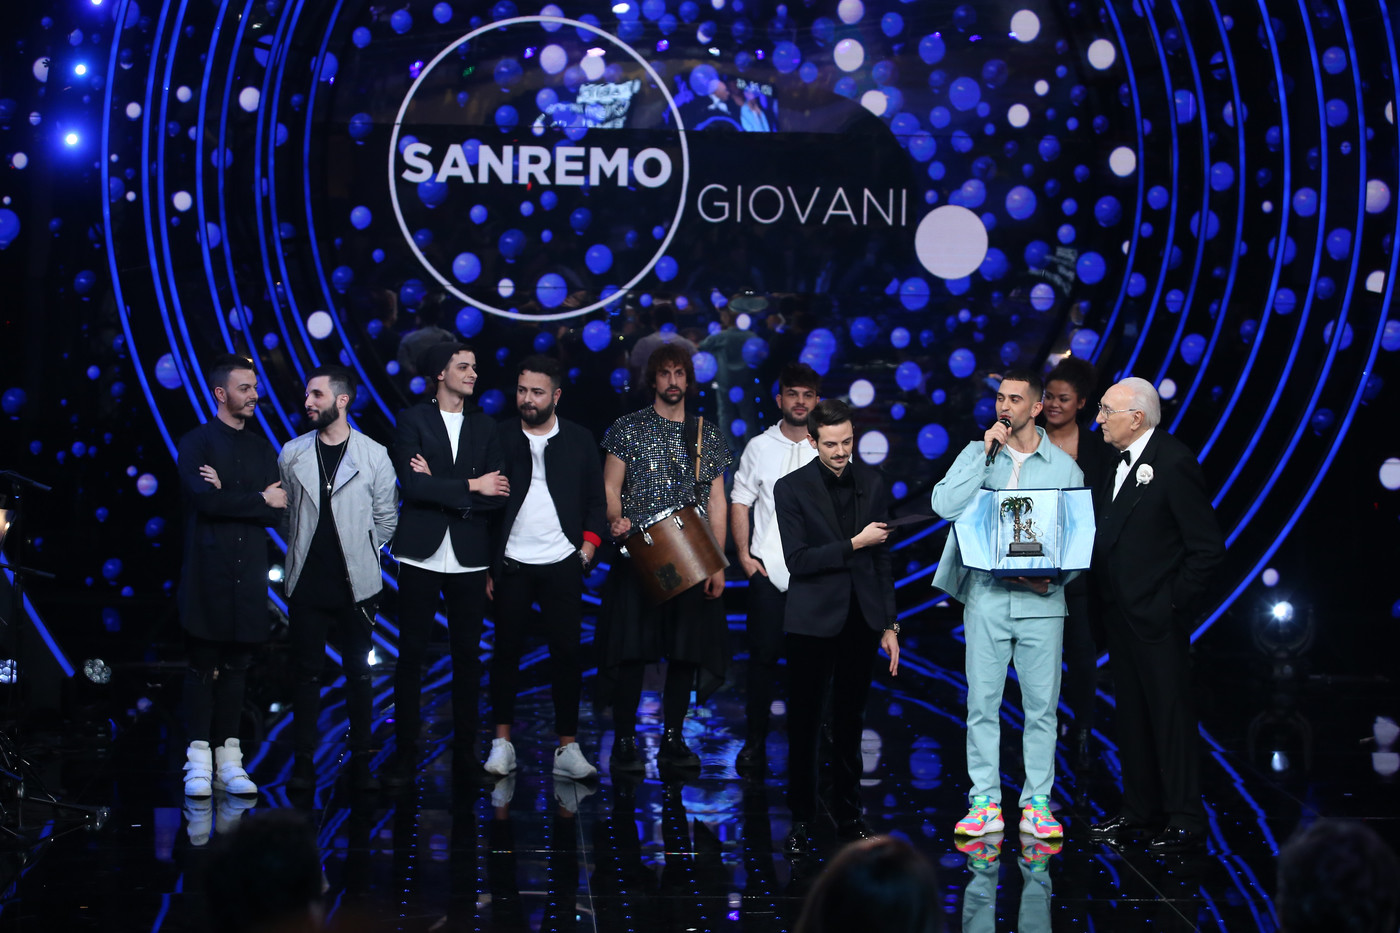 Sanremo 2019, i 24 brani in gara: dal rap al rock fra amore e migranti